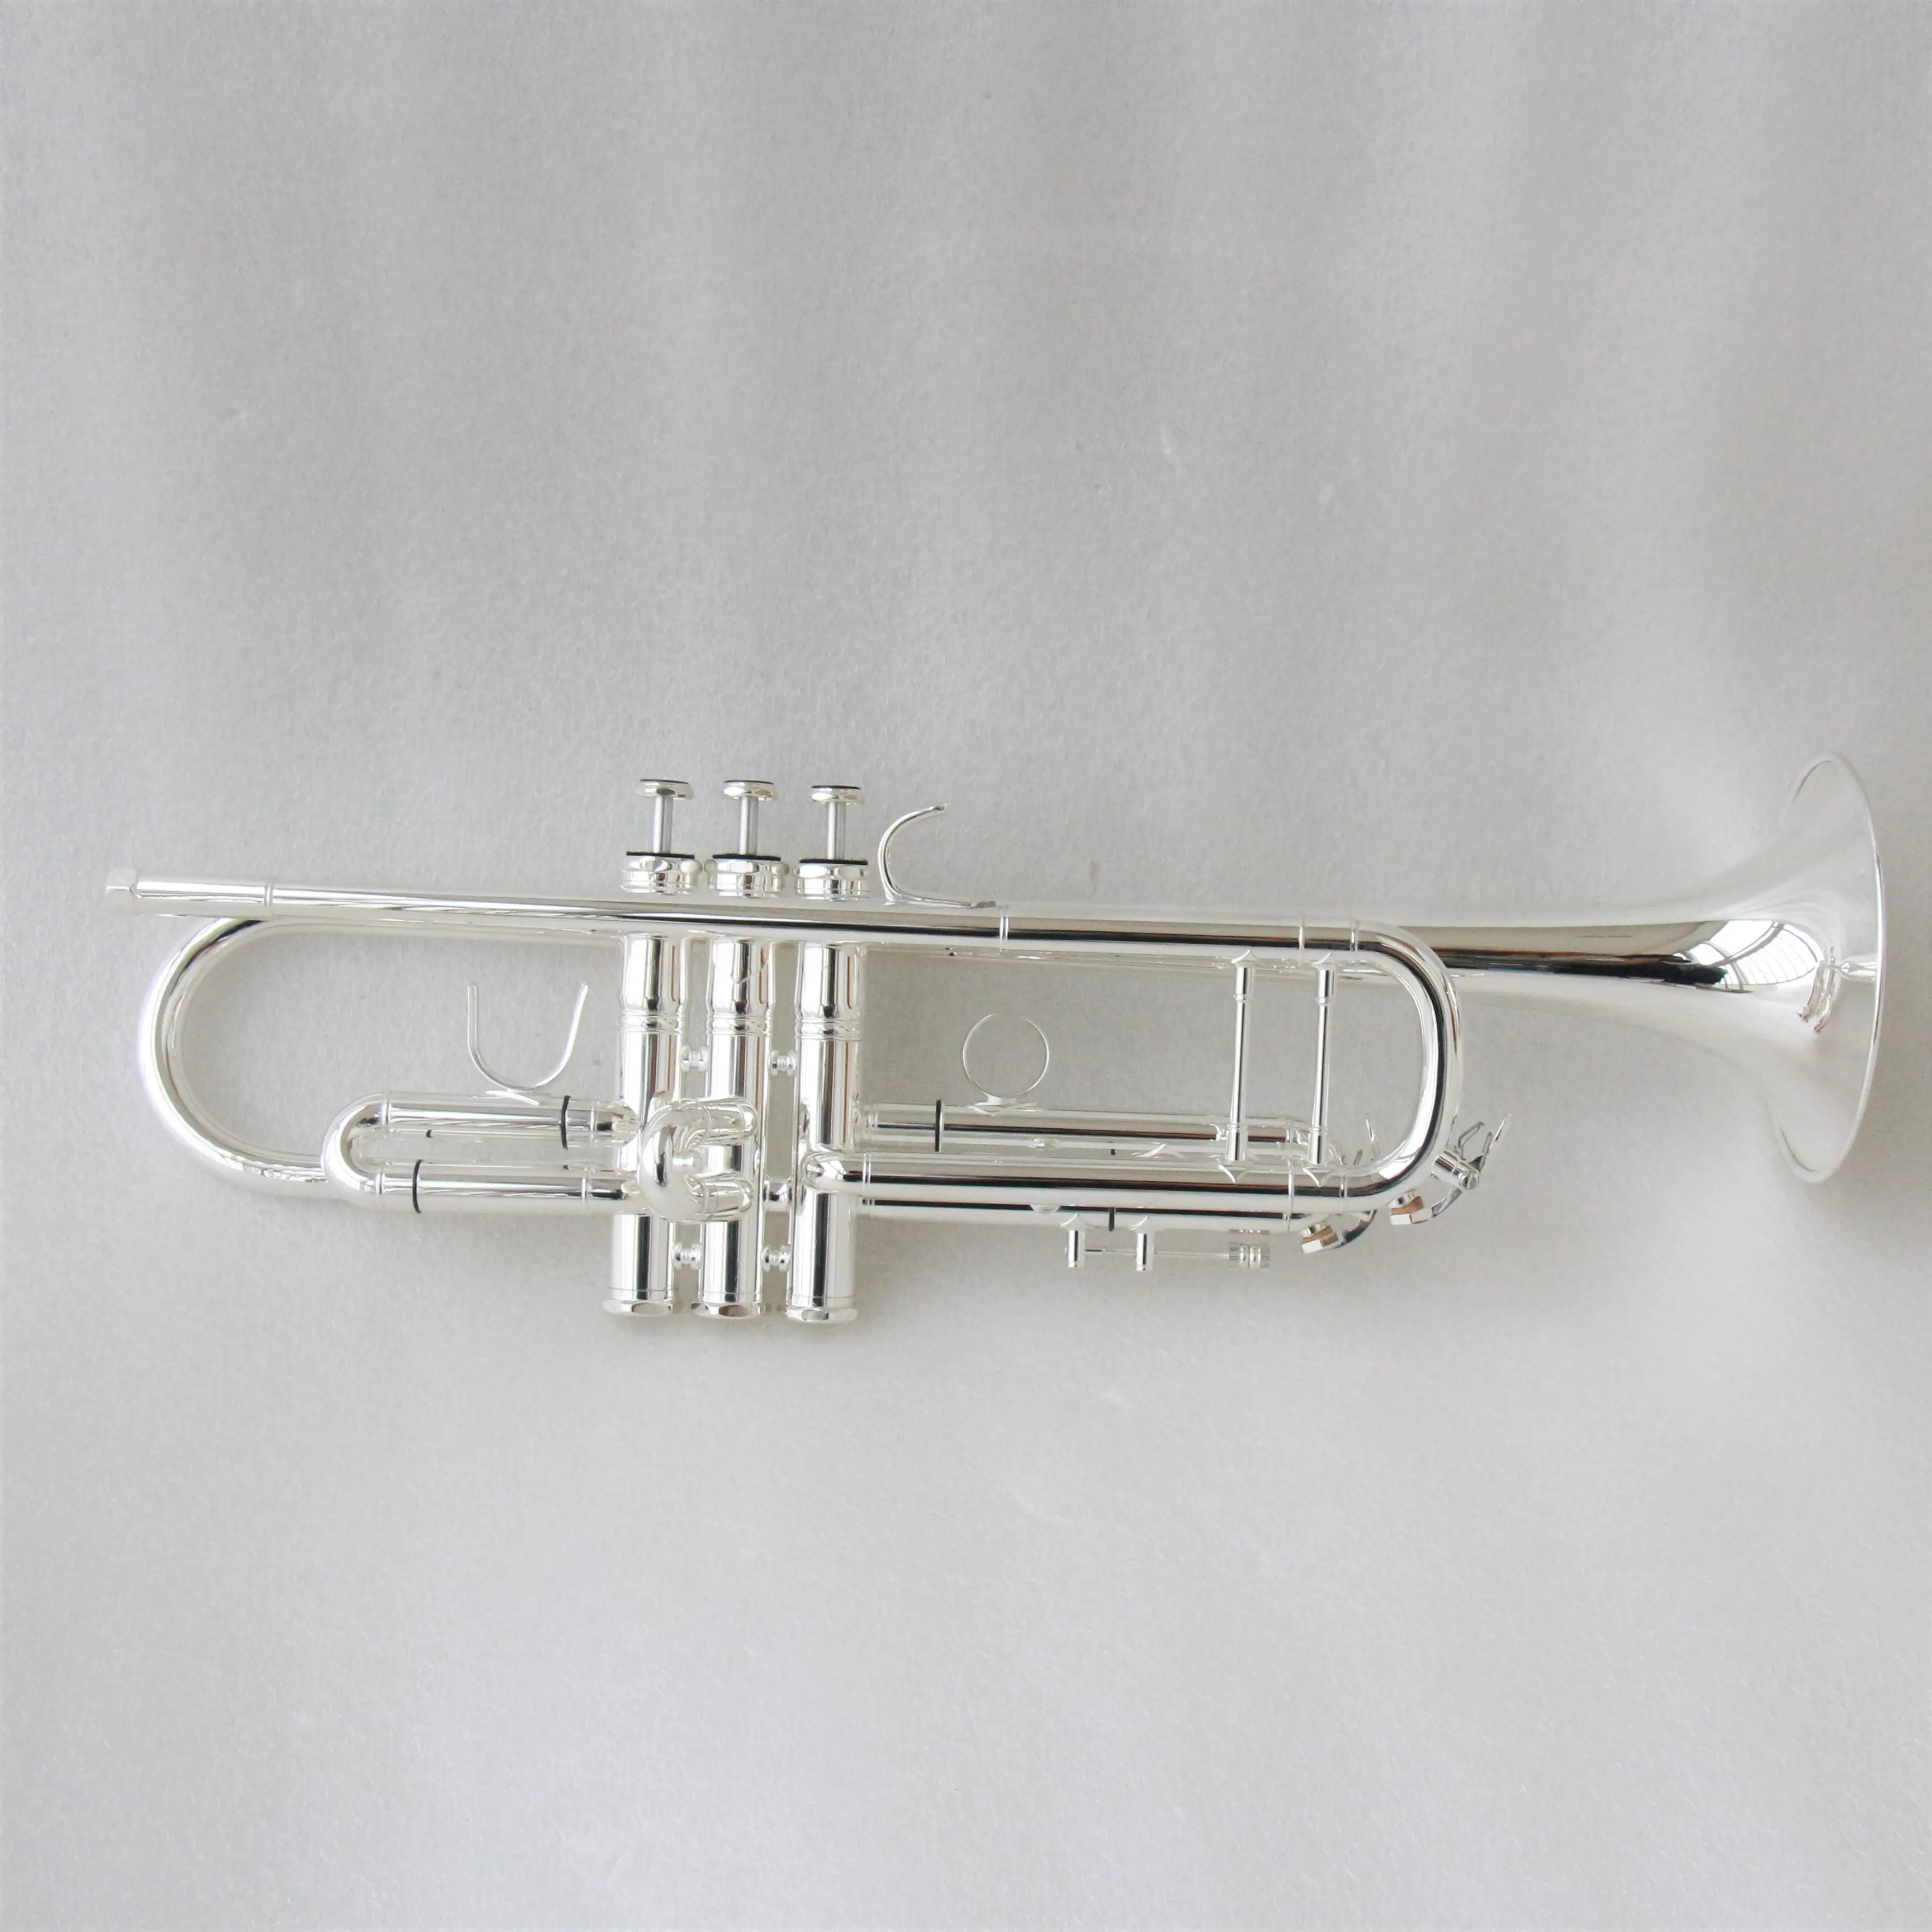 Trompeta copia profesional trompeta famosa marca estilo alta calidad económica trompeta plateada